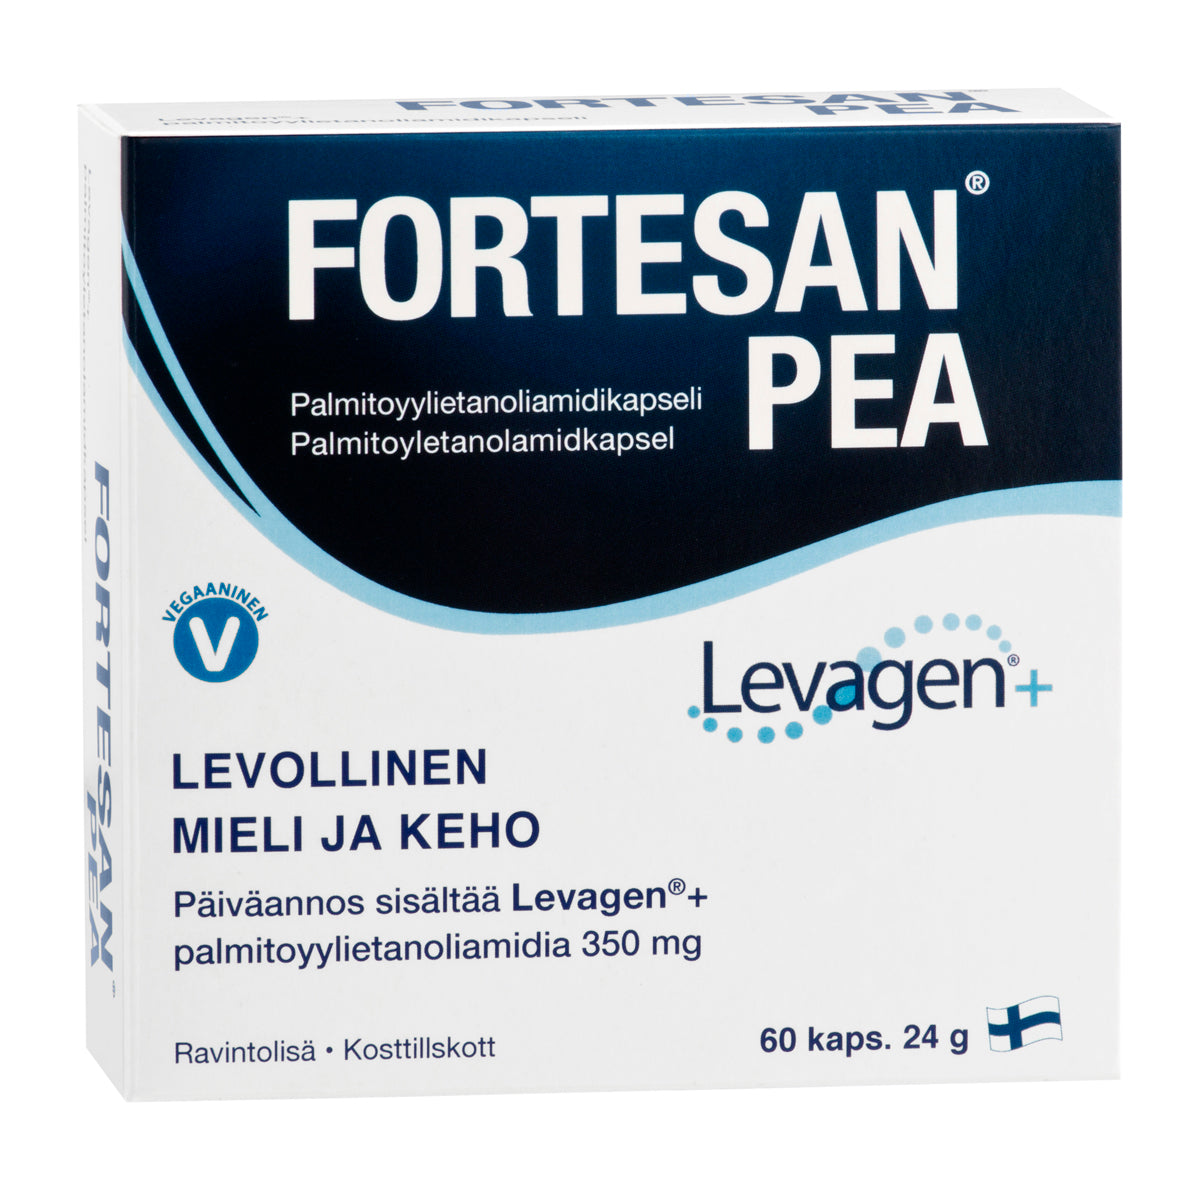 Fortesan PEA - Palmitoyylietanoliamidikapseli 350 mg 60 kaps. - Poistuu